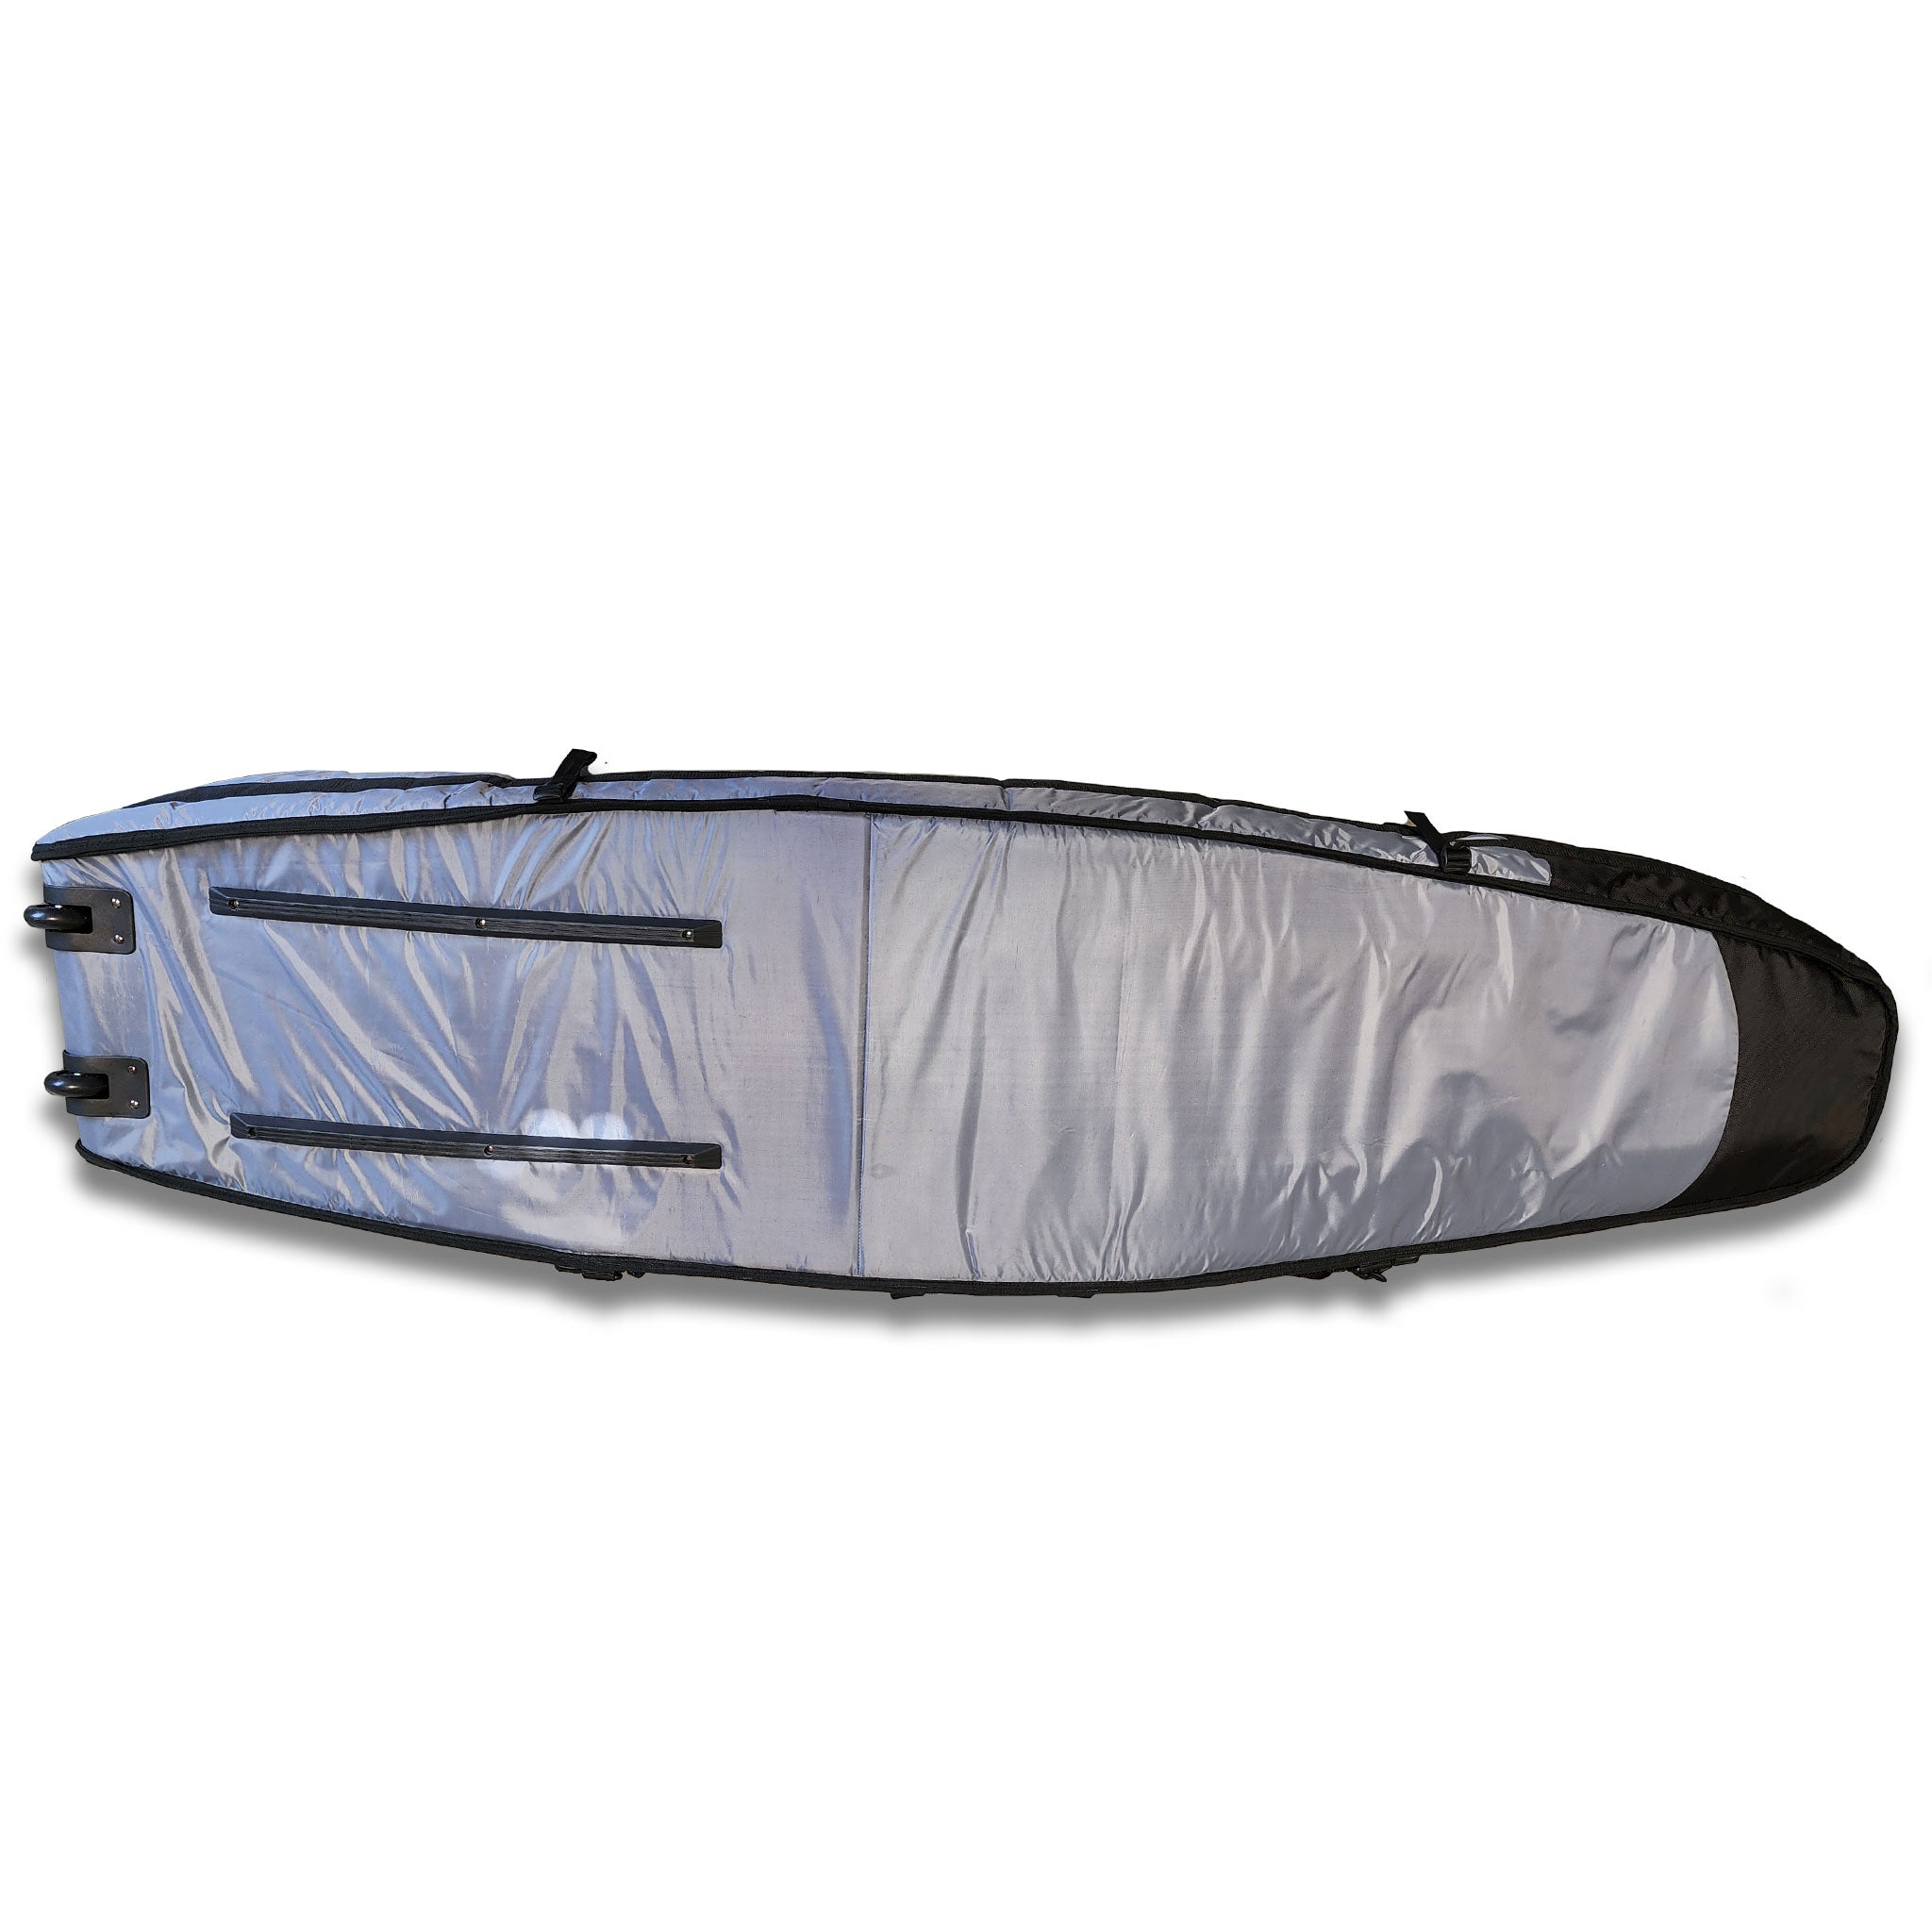 6'6" - 7'6" Triple Surfboard Travel Bag with Wheels